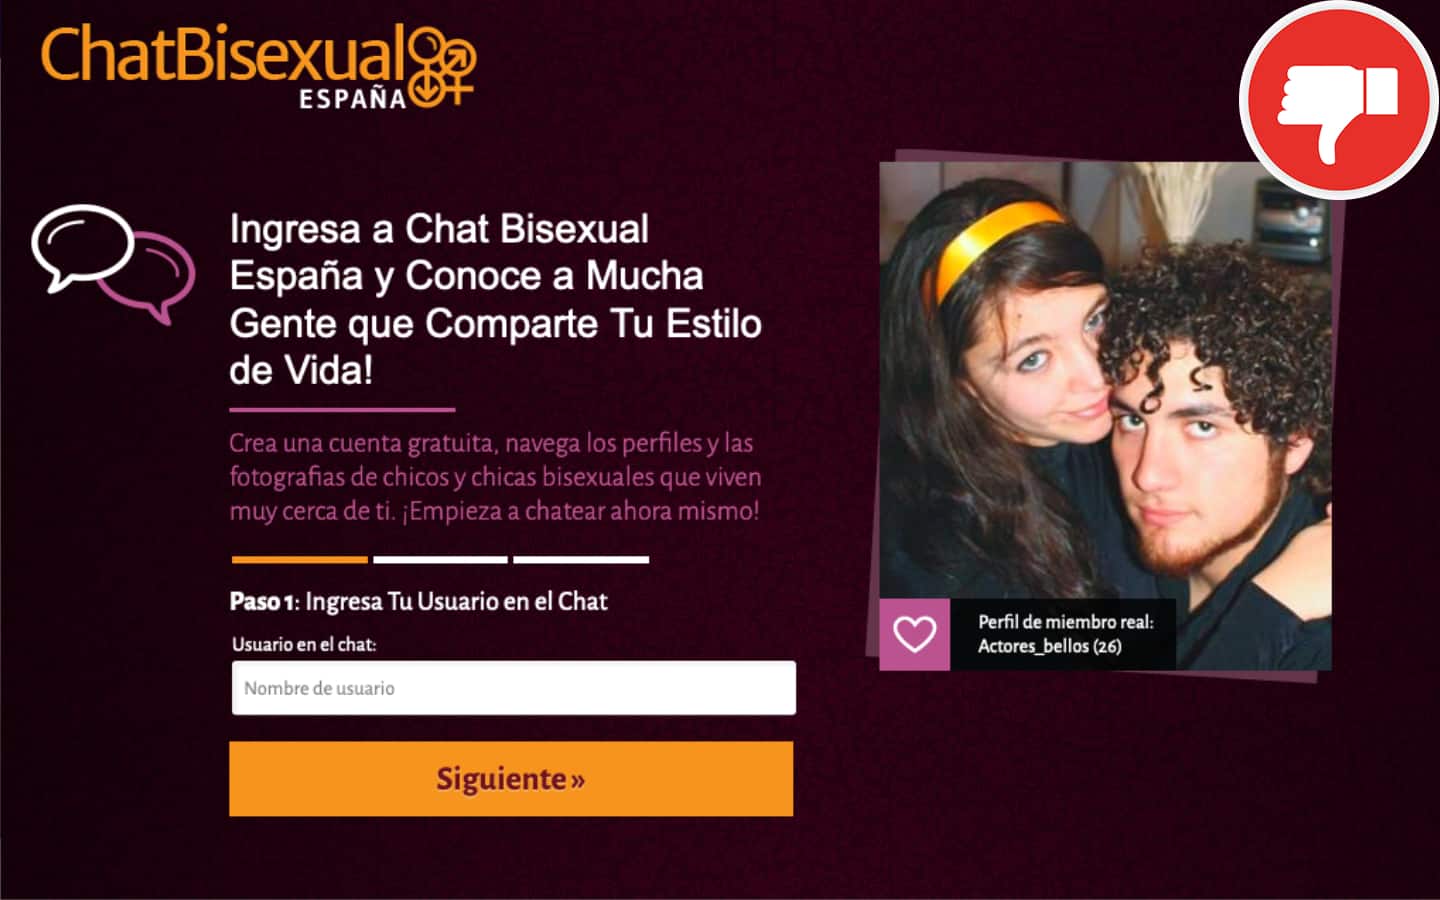 ChatBisexualEspana.com Estafa